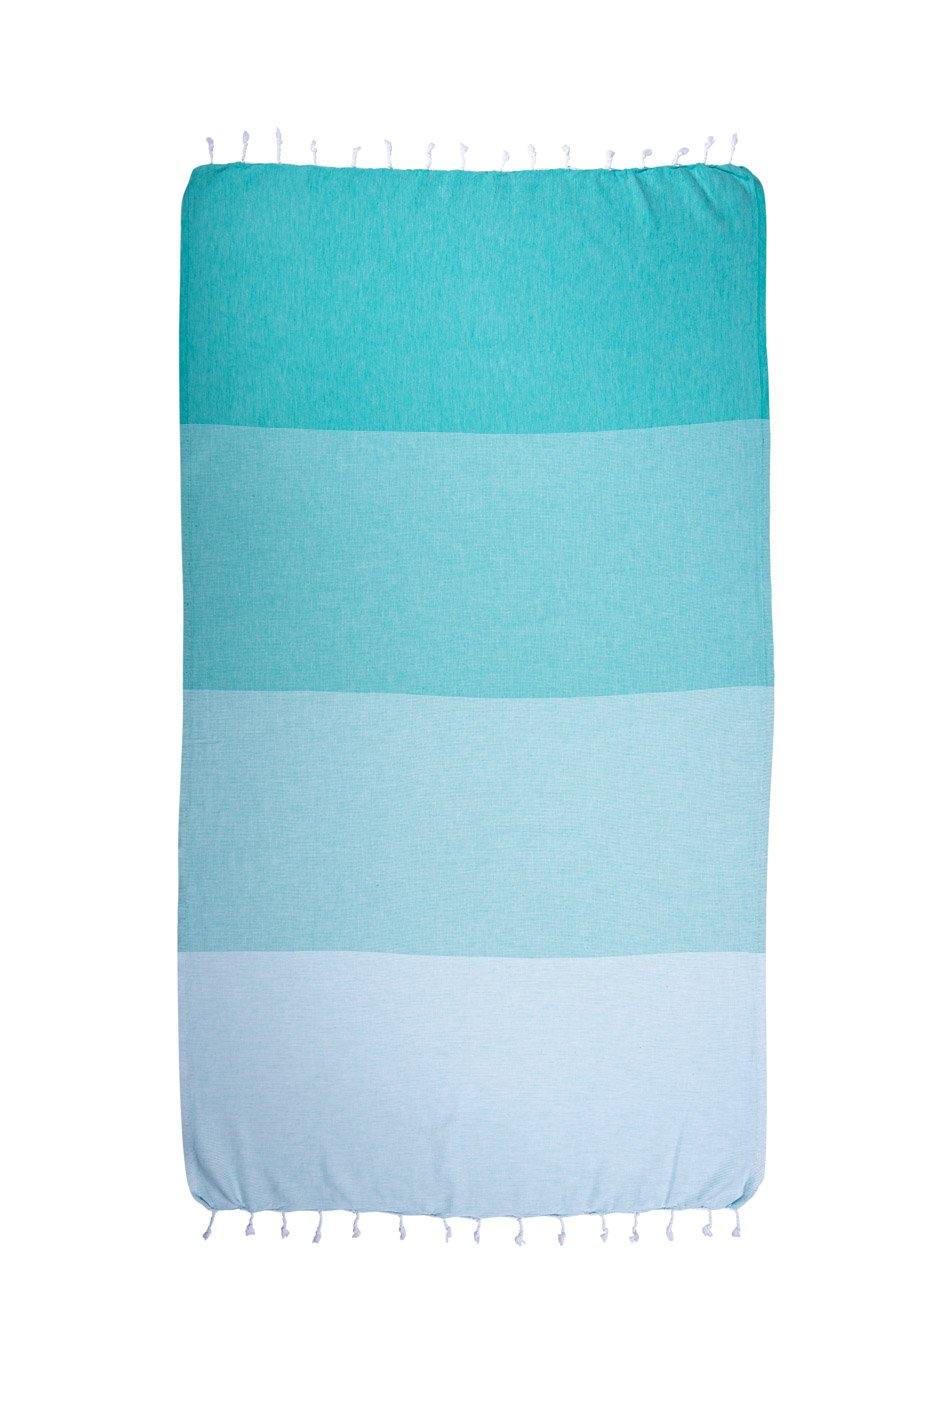 Dune - Full Length Green Quick Drying Lightweight Towel 